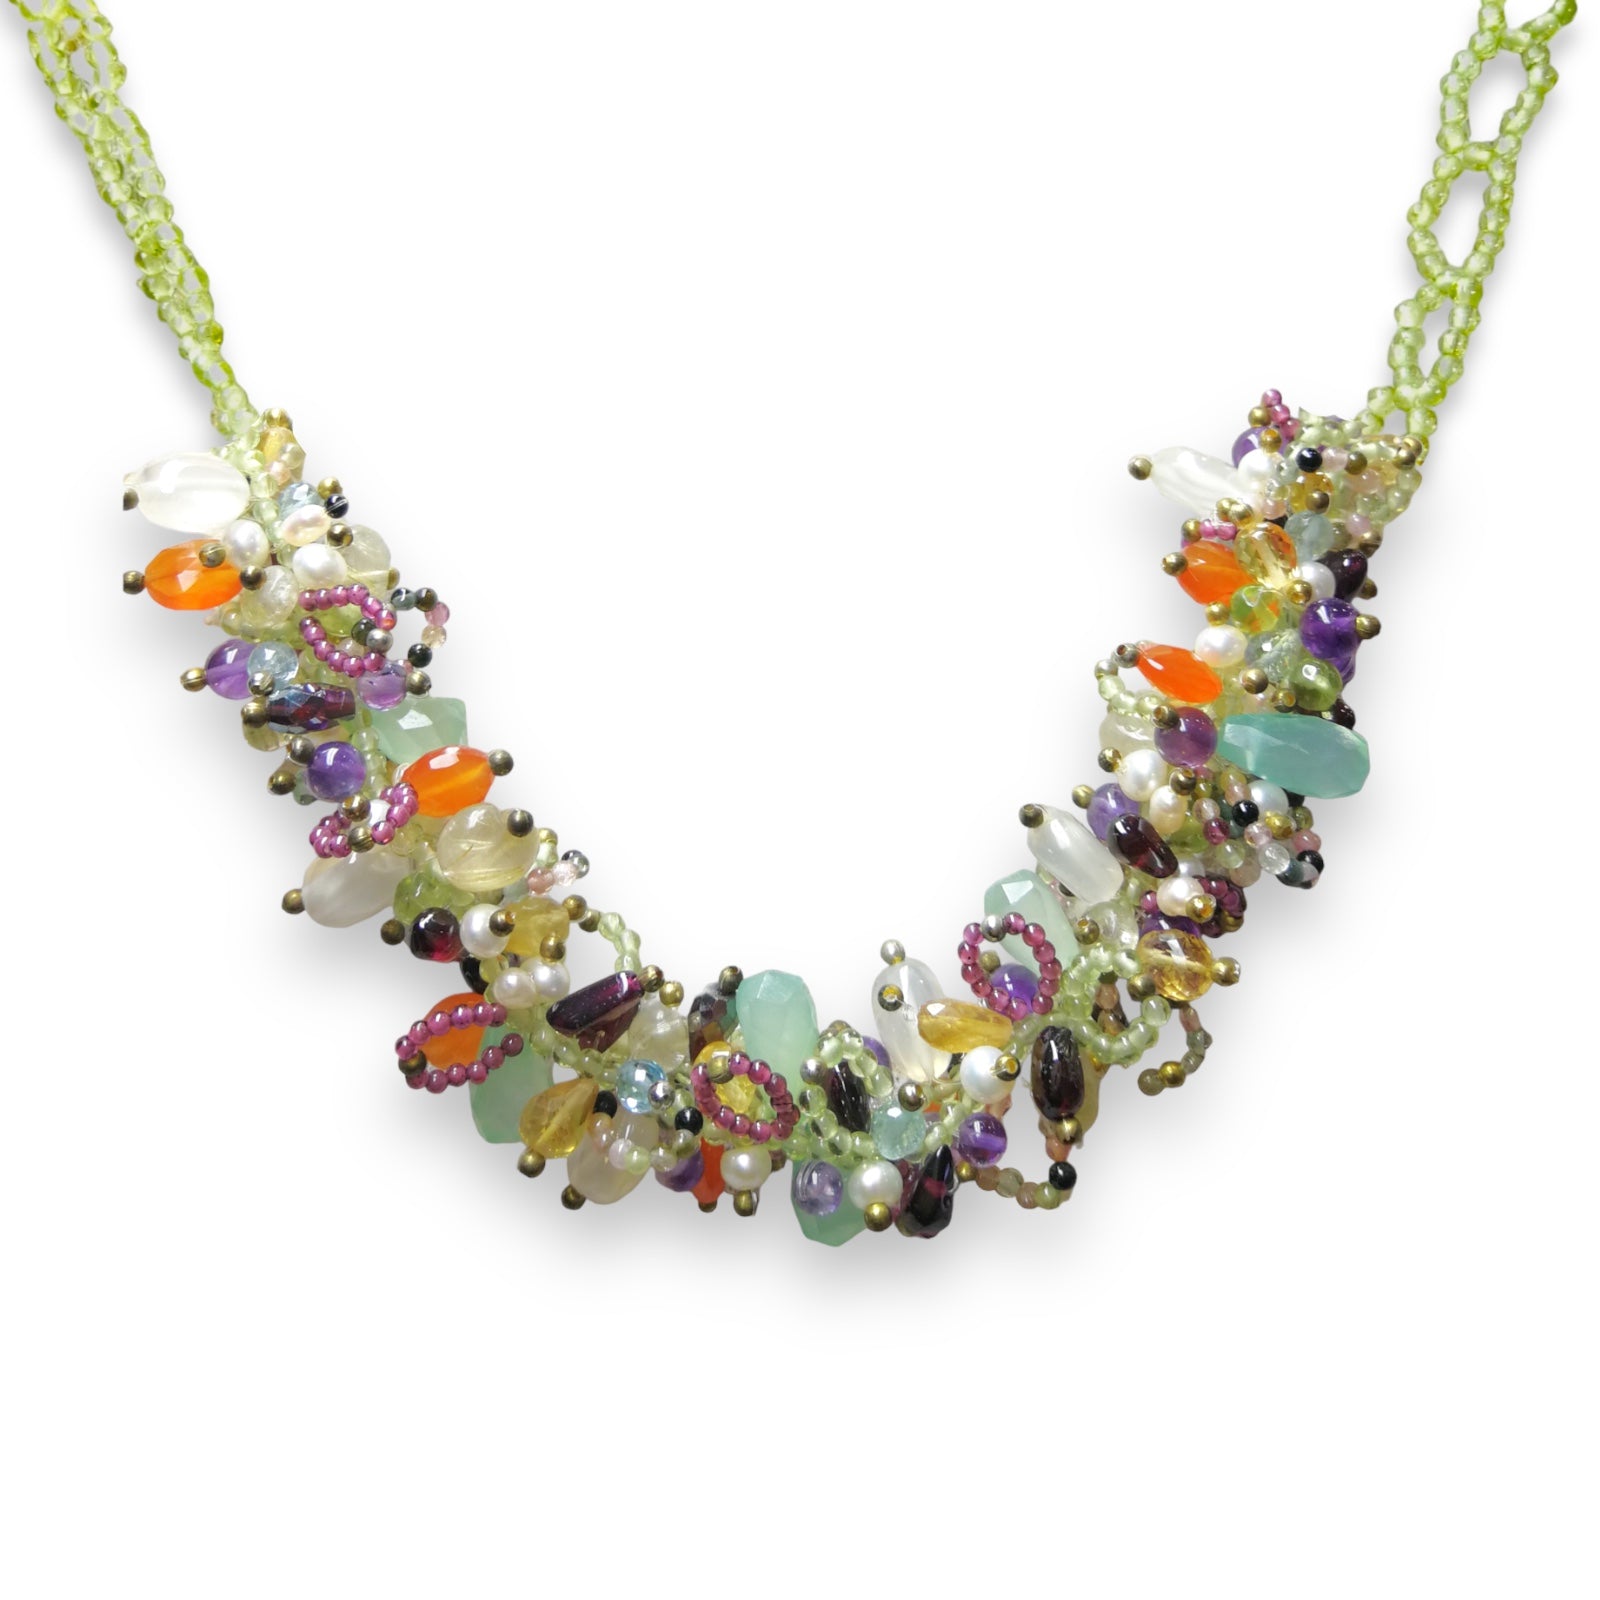 Natural Handmade Necklace 16"-18" Peridot, Coral, Garnet, Tourmaline, Citrine, Amethyst, Peridot, White Topaz Gemstone Beads Jewellery